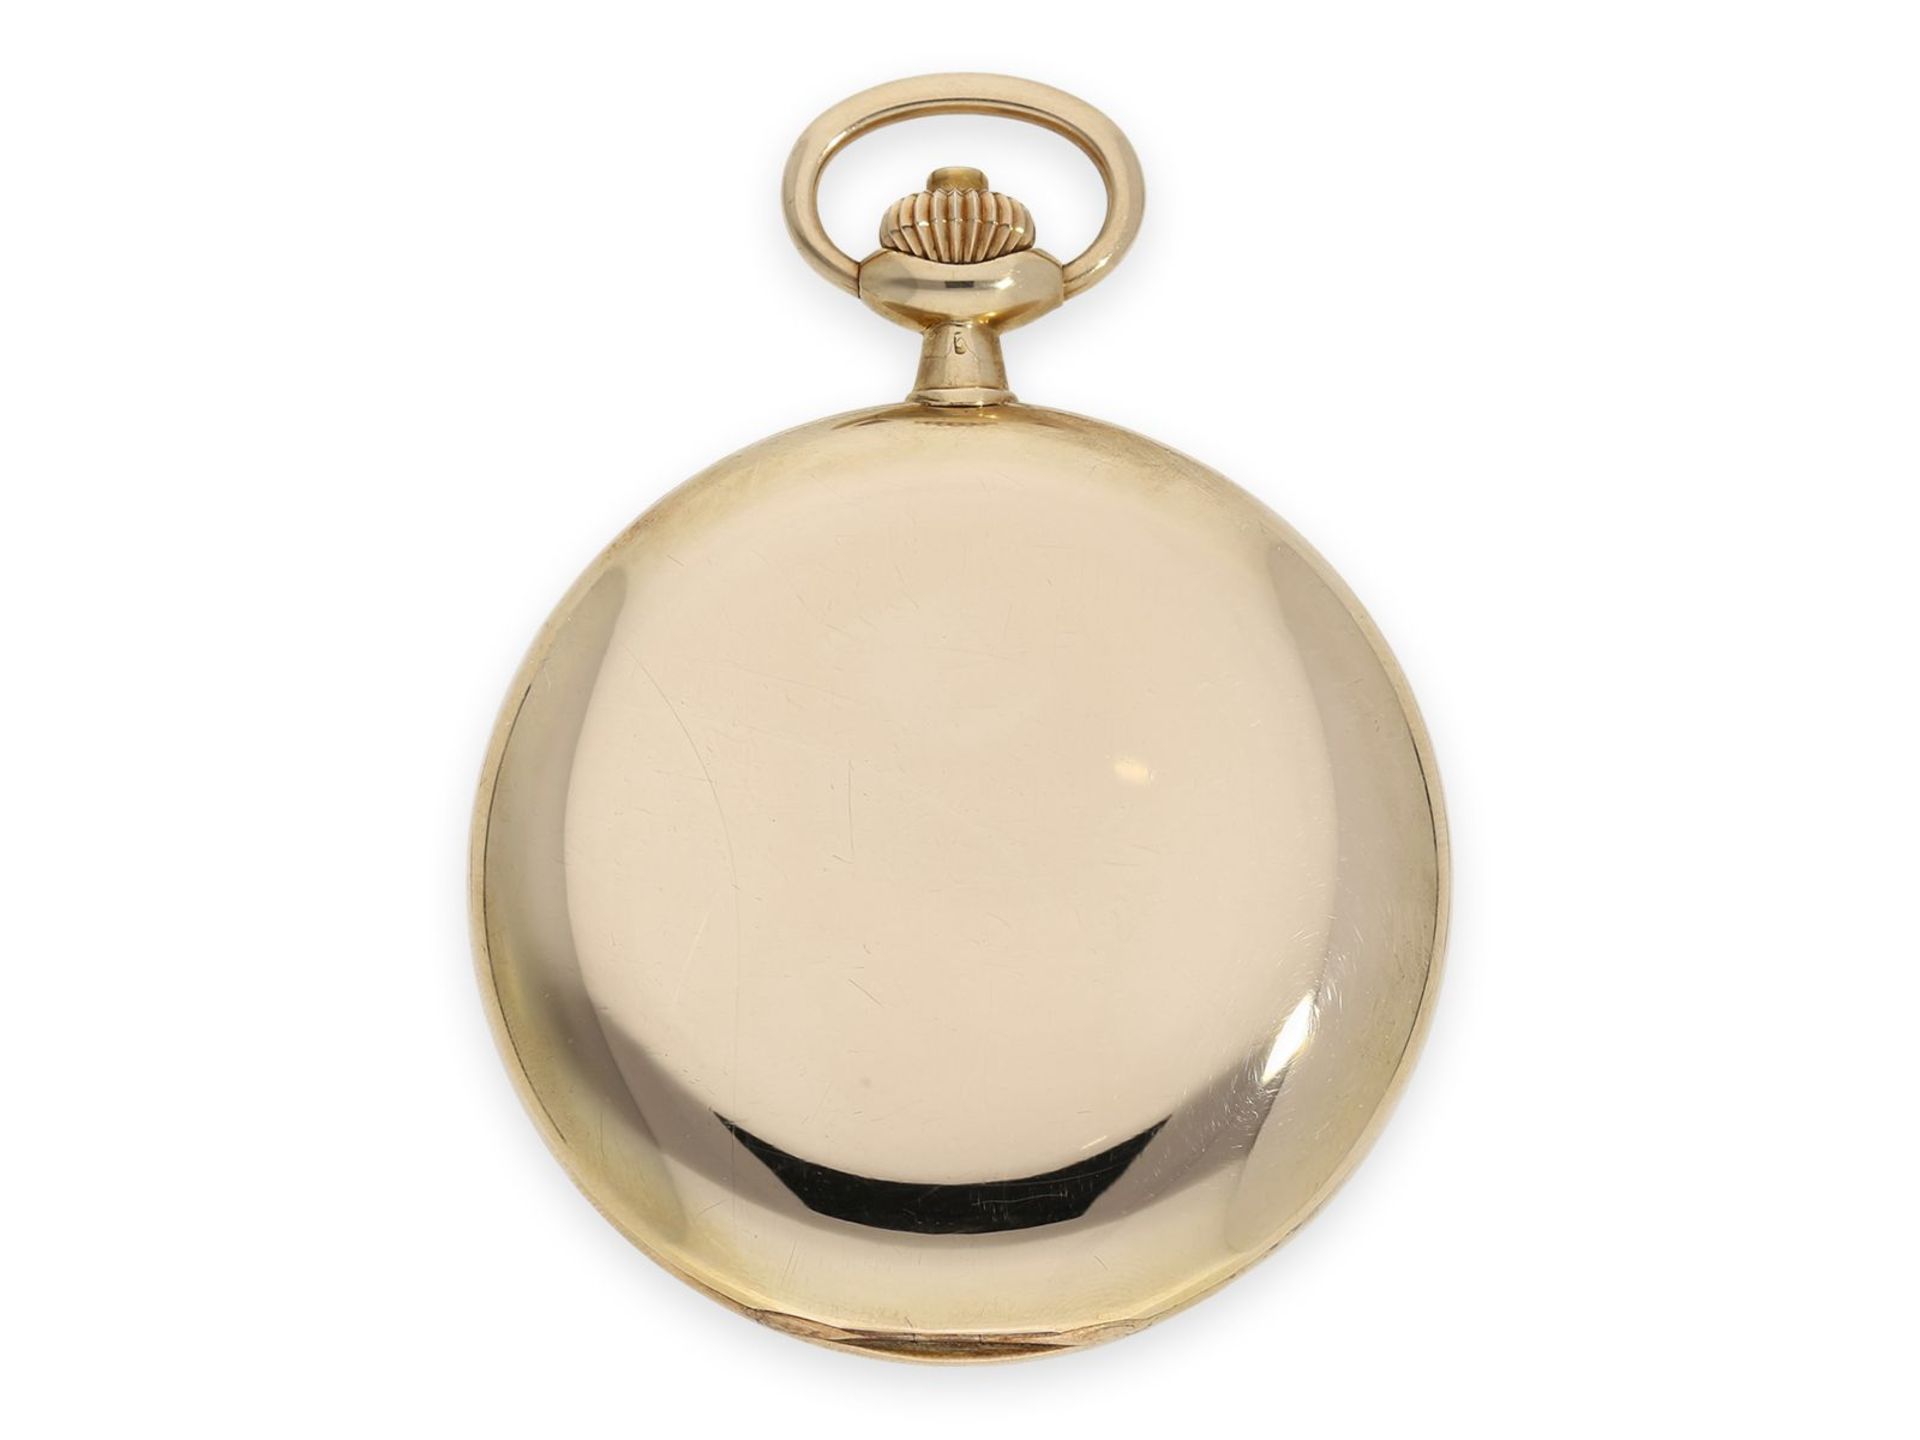 Taschenuhr: qualitätsvolle Goldsavonnette der Marke Longines, Ankerchronometer Kaliber 19.80, ca. - Image 6 of 7